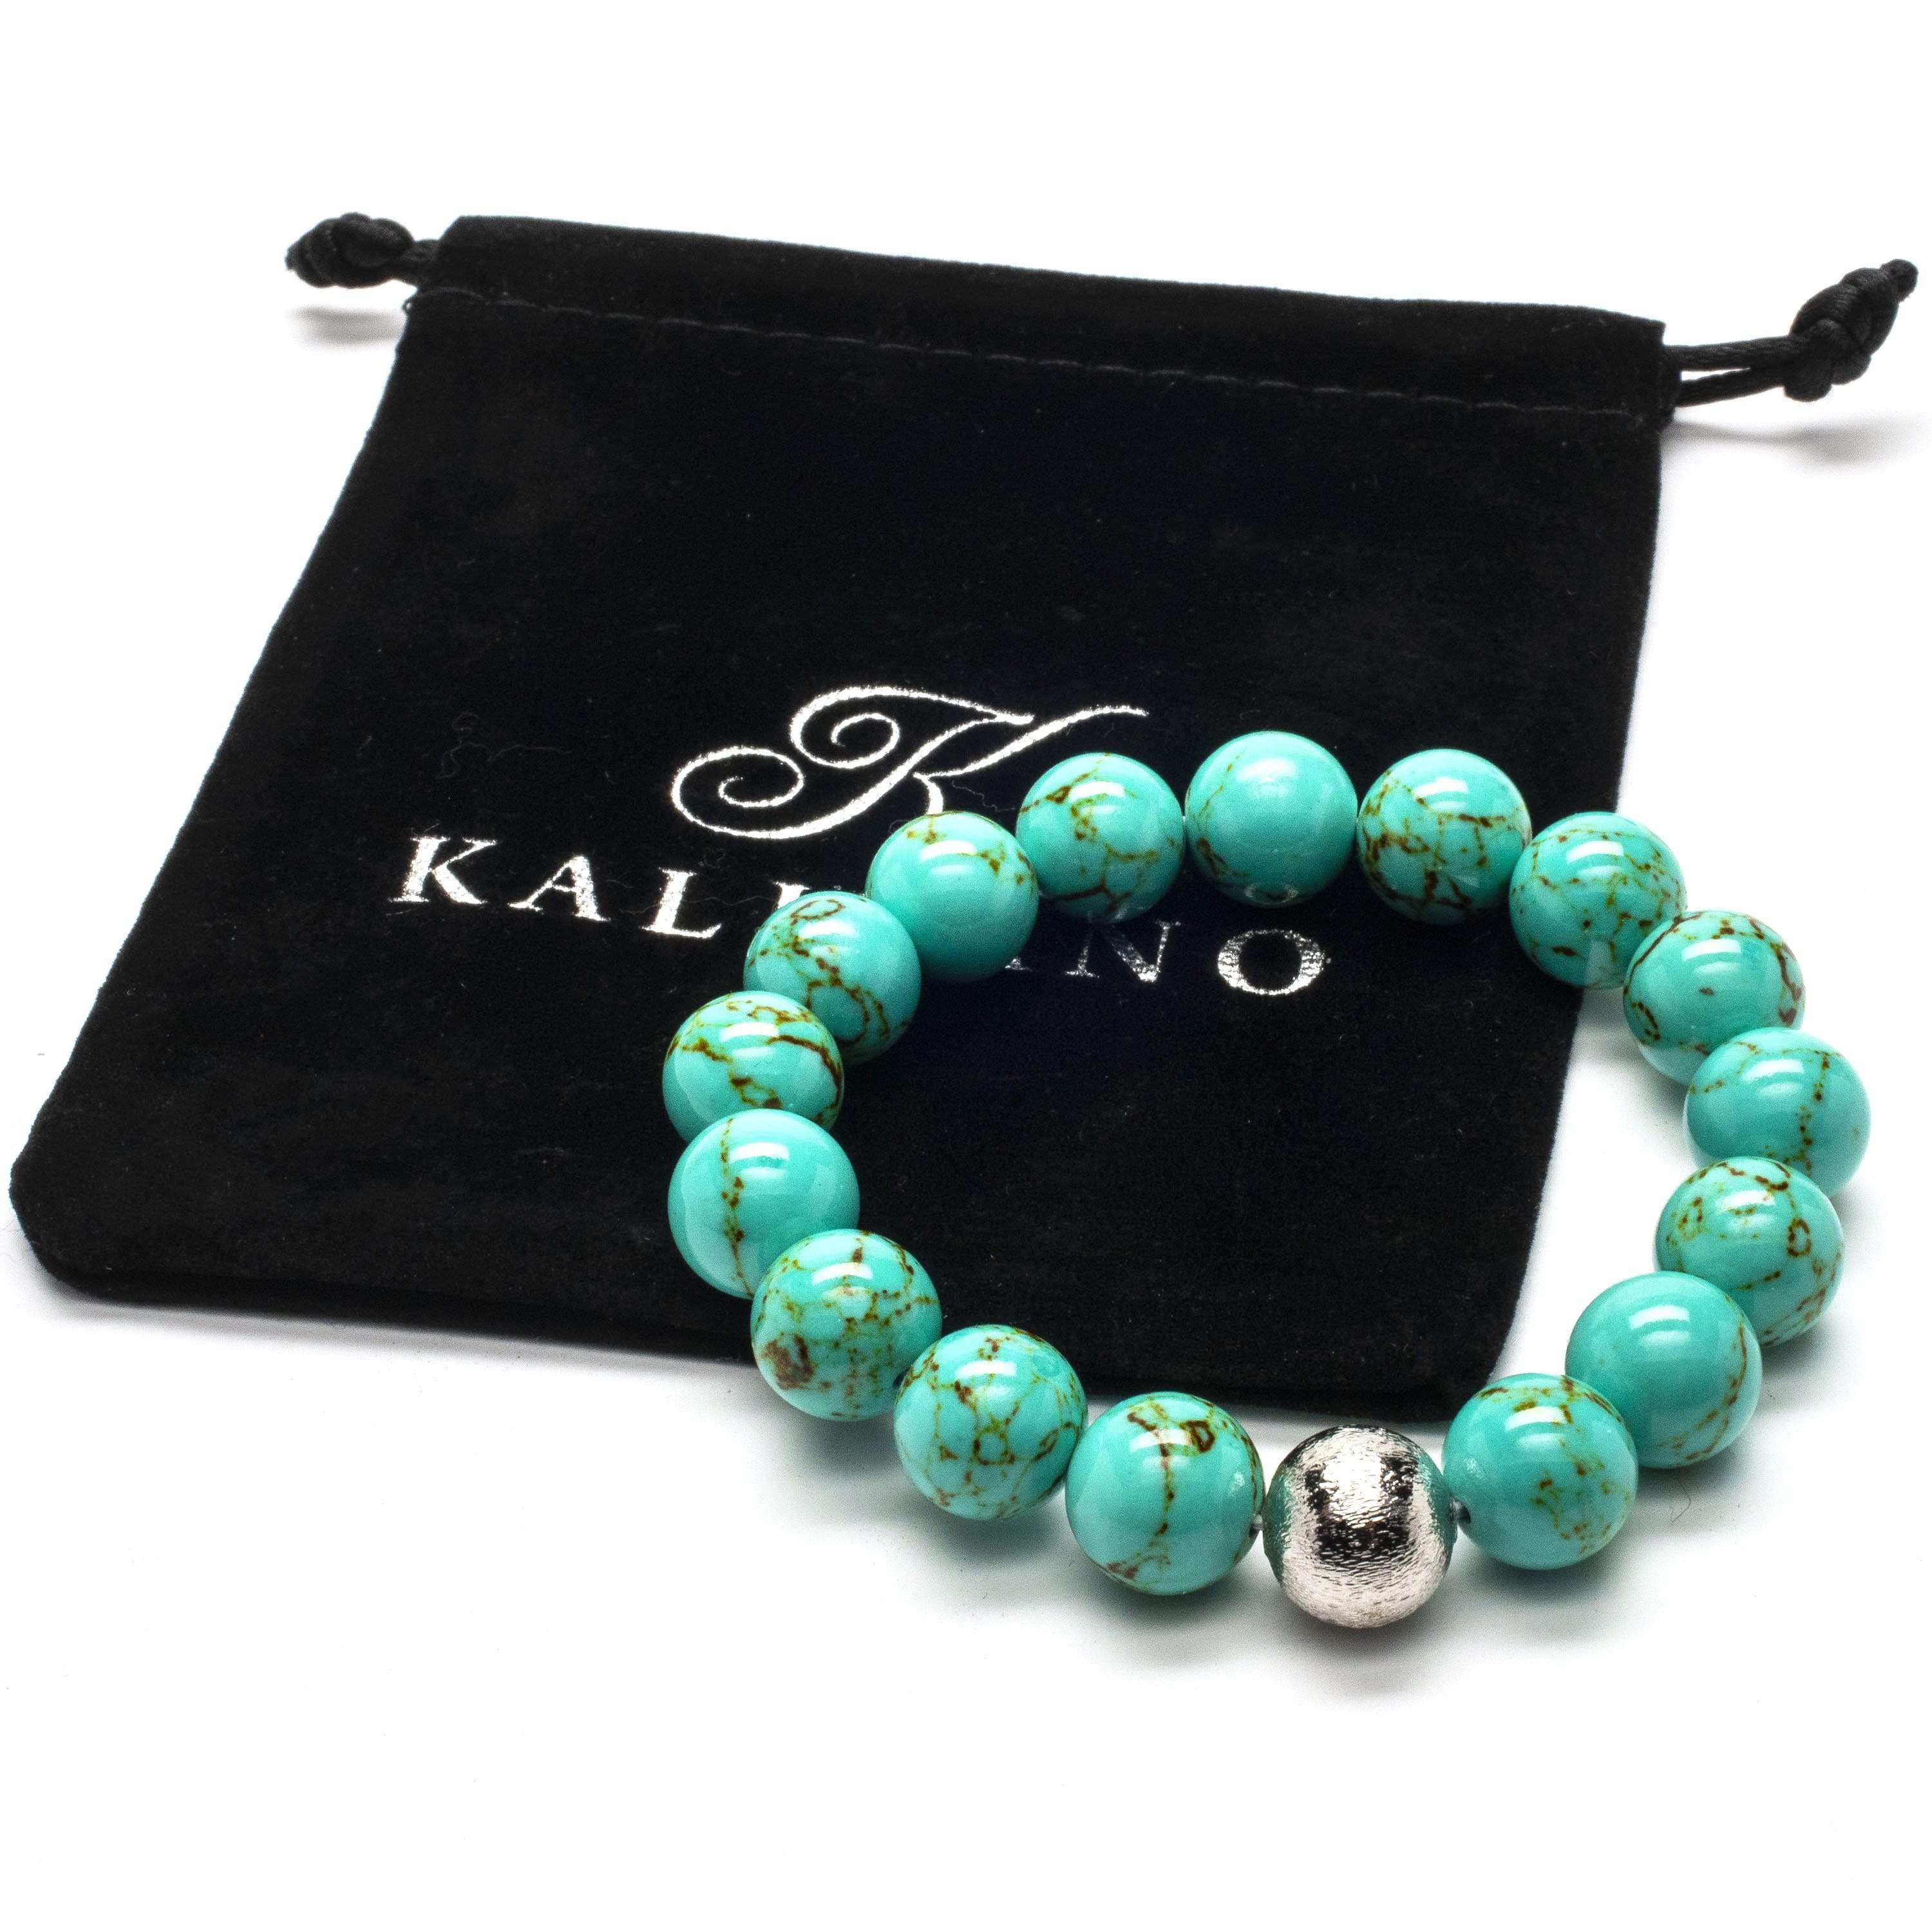 Kalifano Gemstone Bracelets Howlite Turquoise 12mm Gemstone Bead Elastic Braceletwith Silver Accent Bead RED-BGP-051